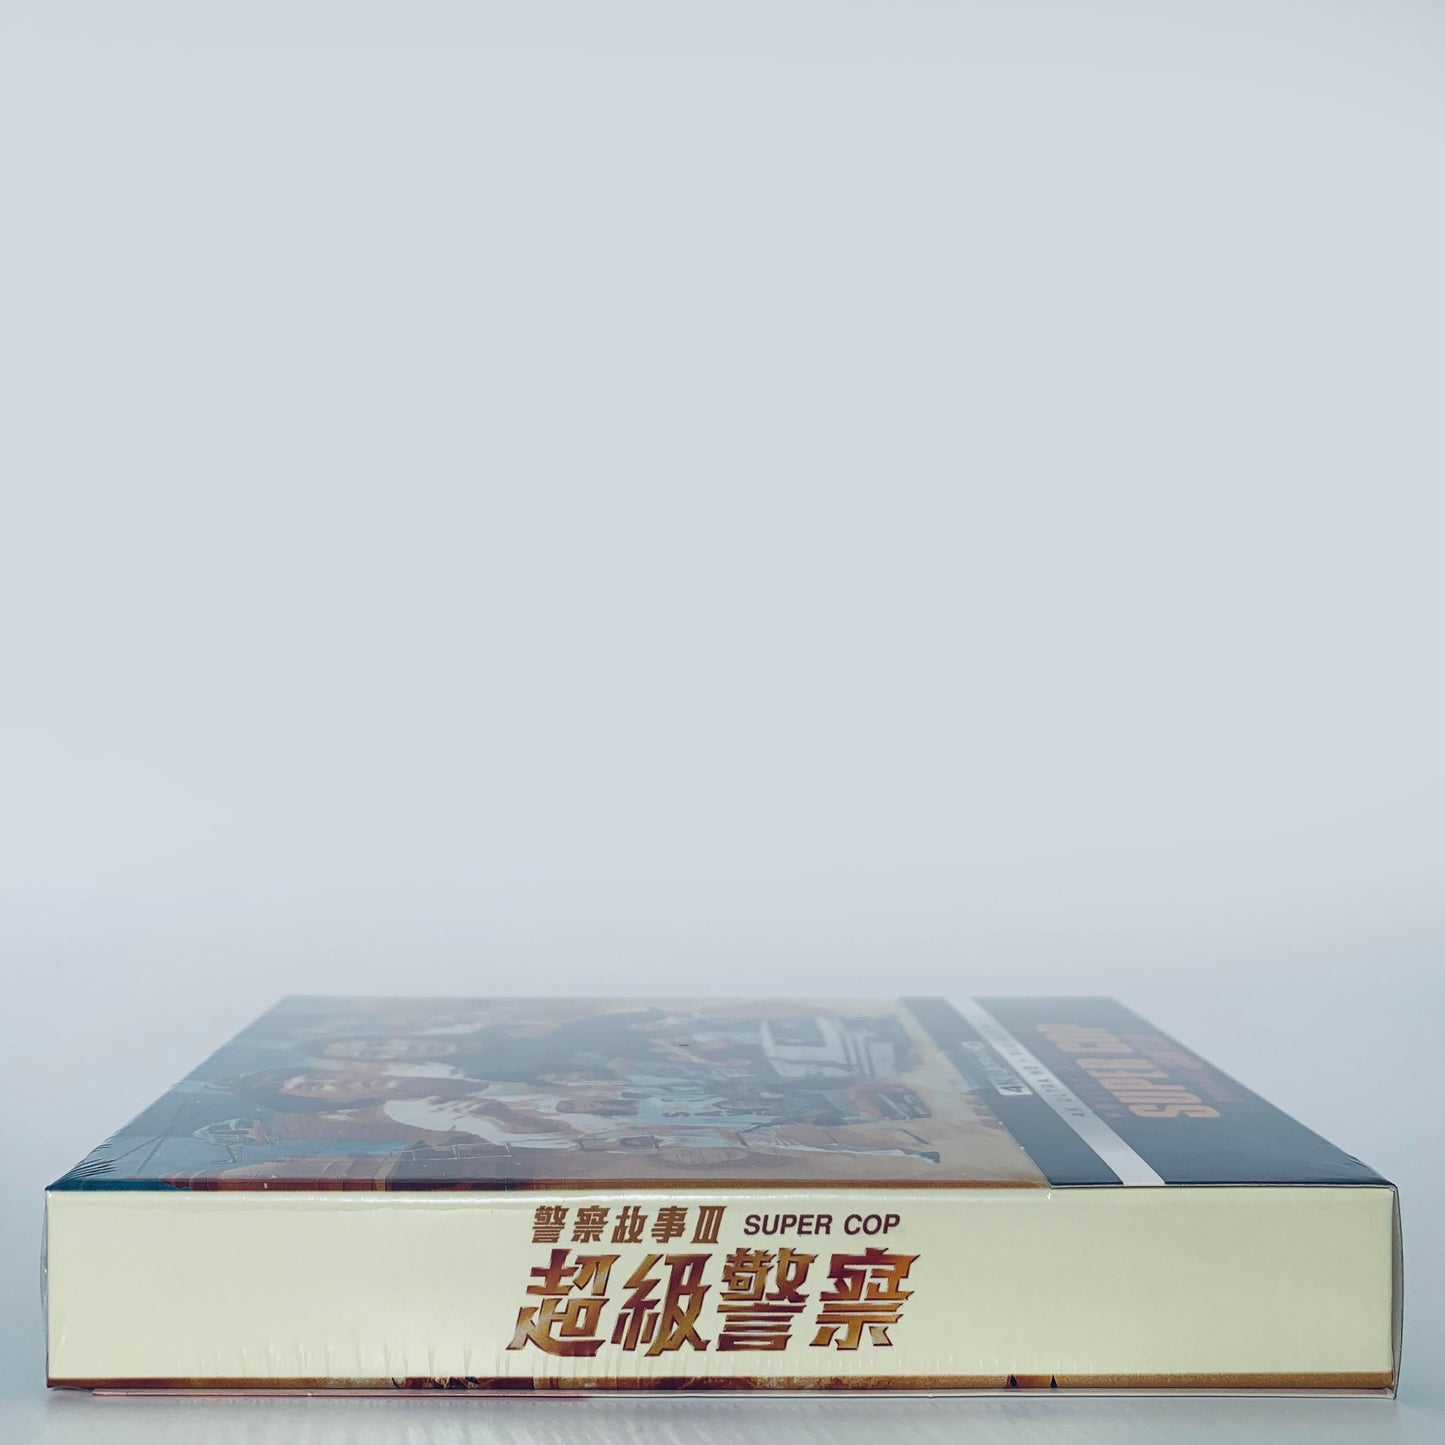 Police Story 3 III Super Cop Jackie Chan 4K UHD Blu-ray 88 Films Supercop